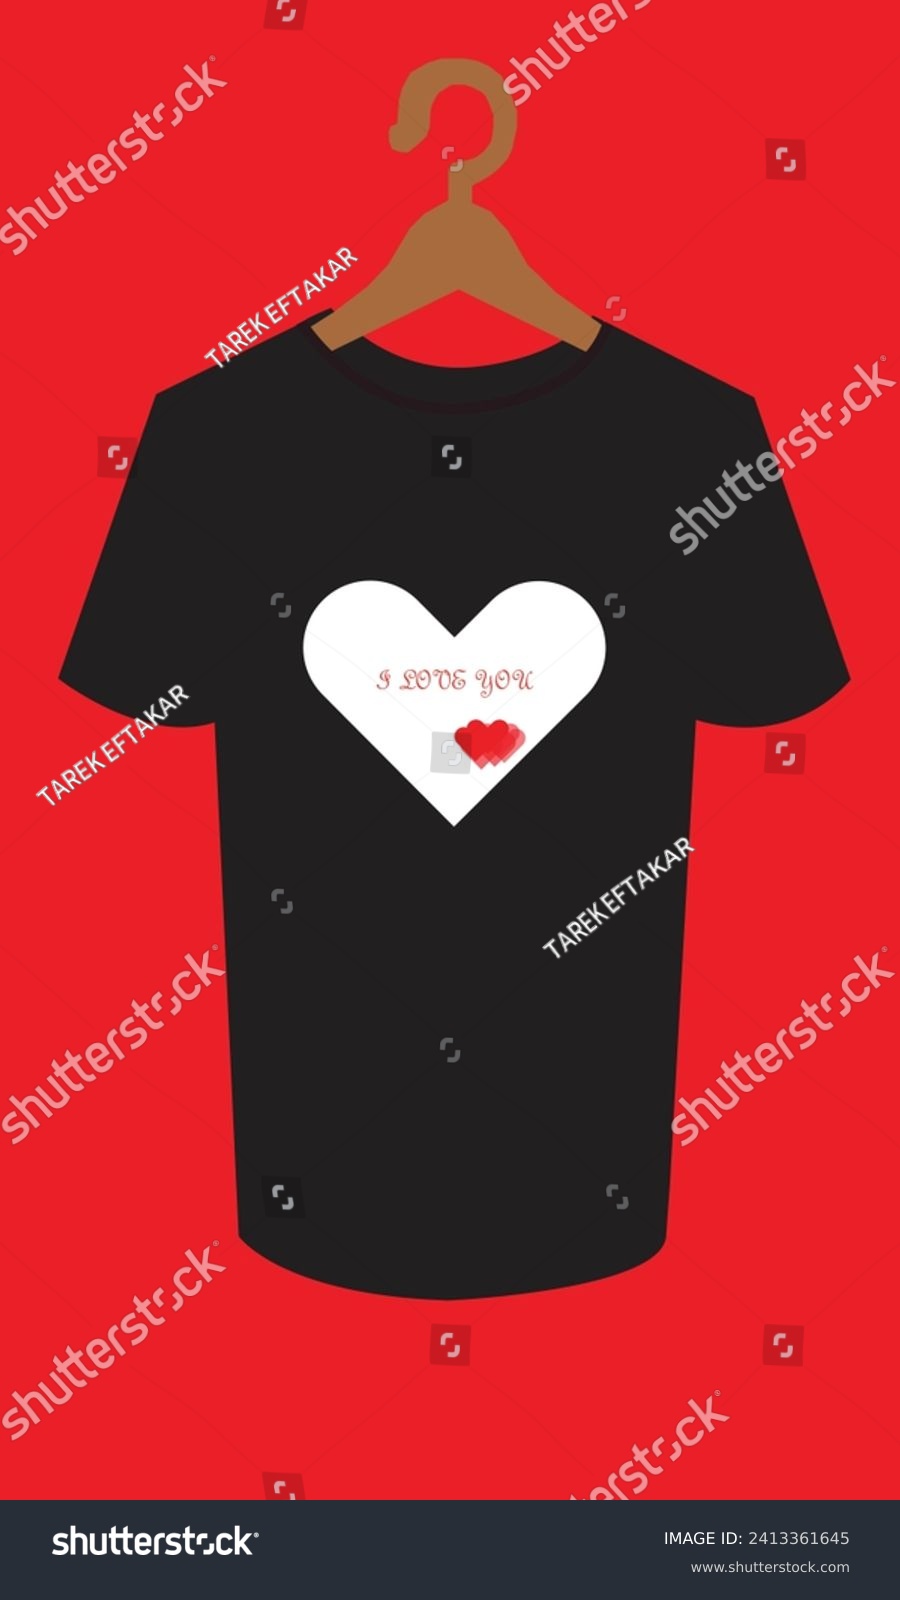 SVG of T-shirt Design For My Heart svg